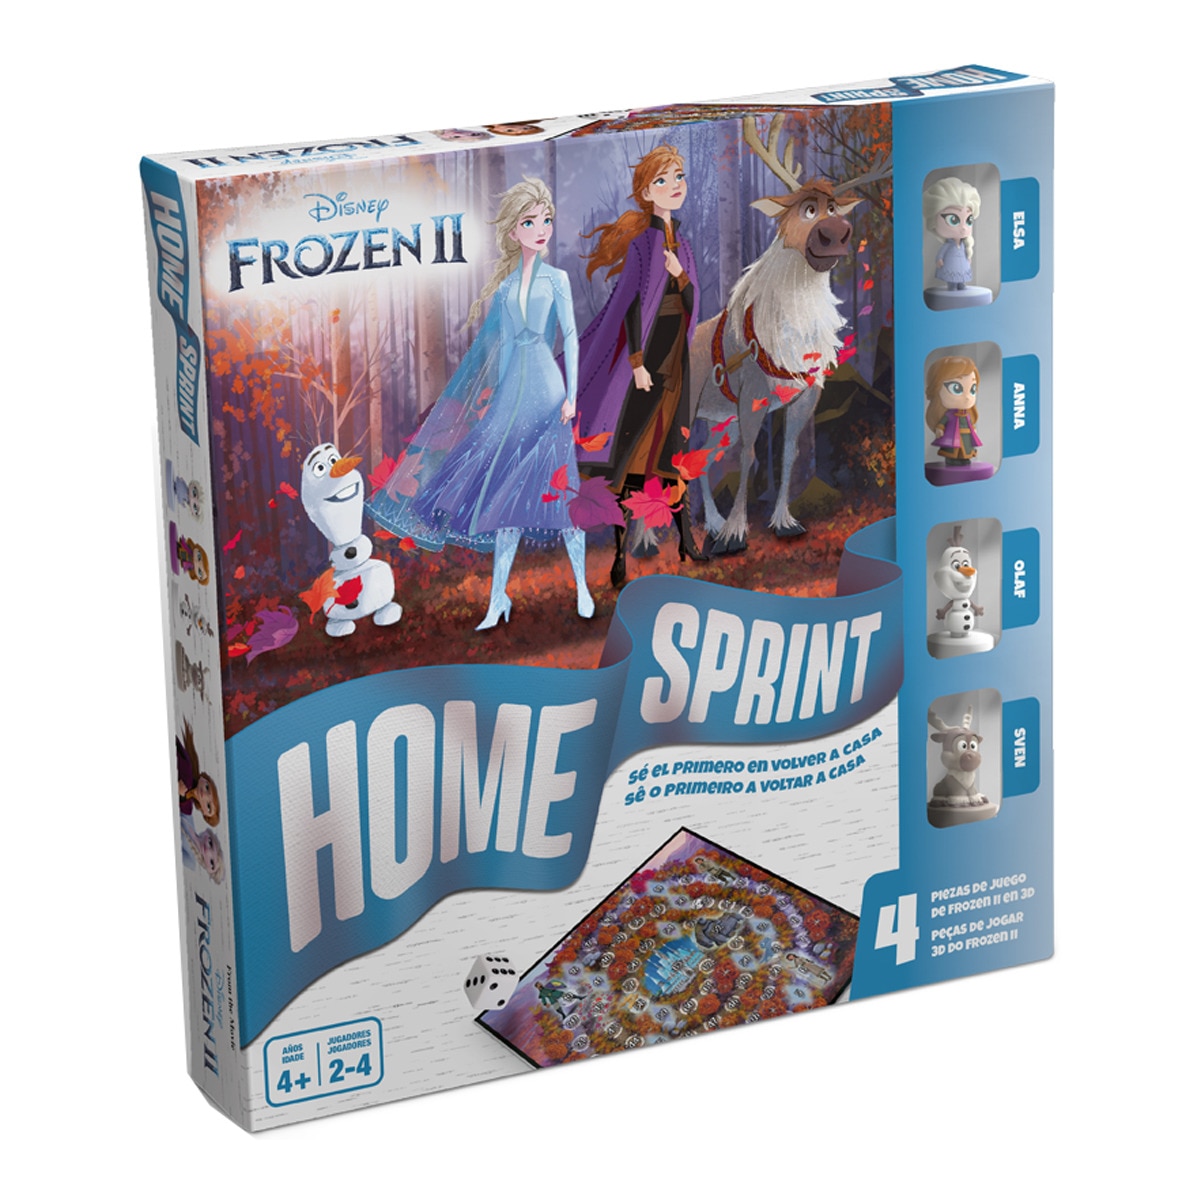 Fournier - Juego Oca Home Sprint Frozen II Disney